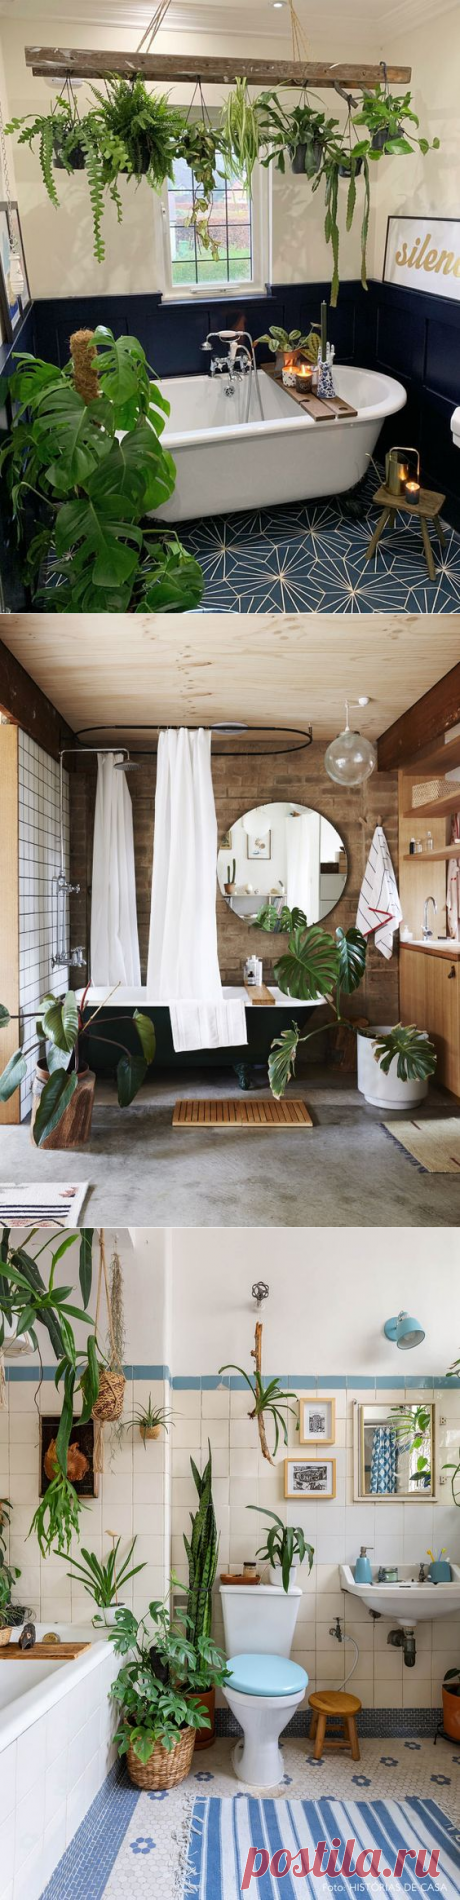 Minimalist Bathroom Ideas With Tropical Style - Home Design Ideas